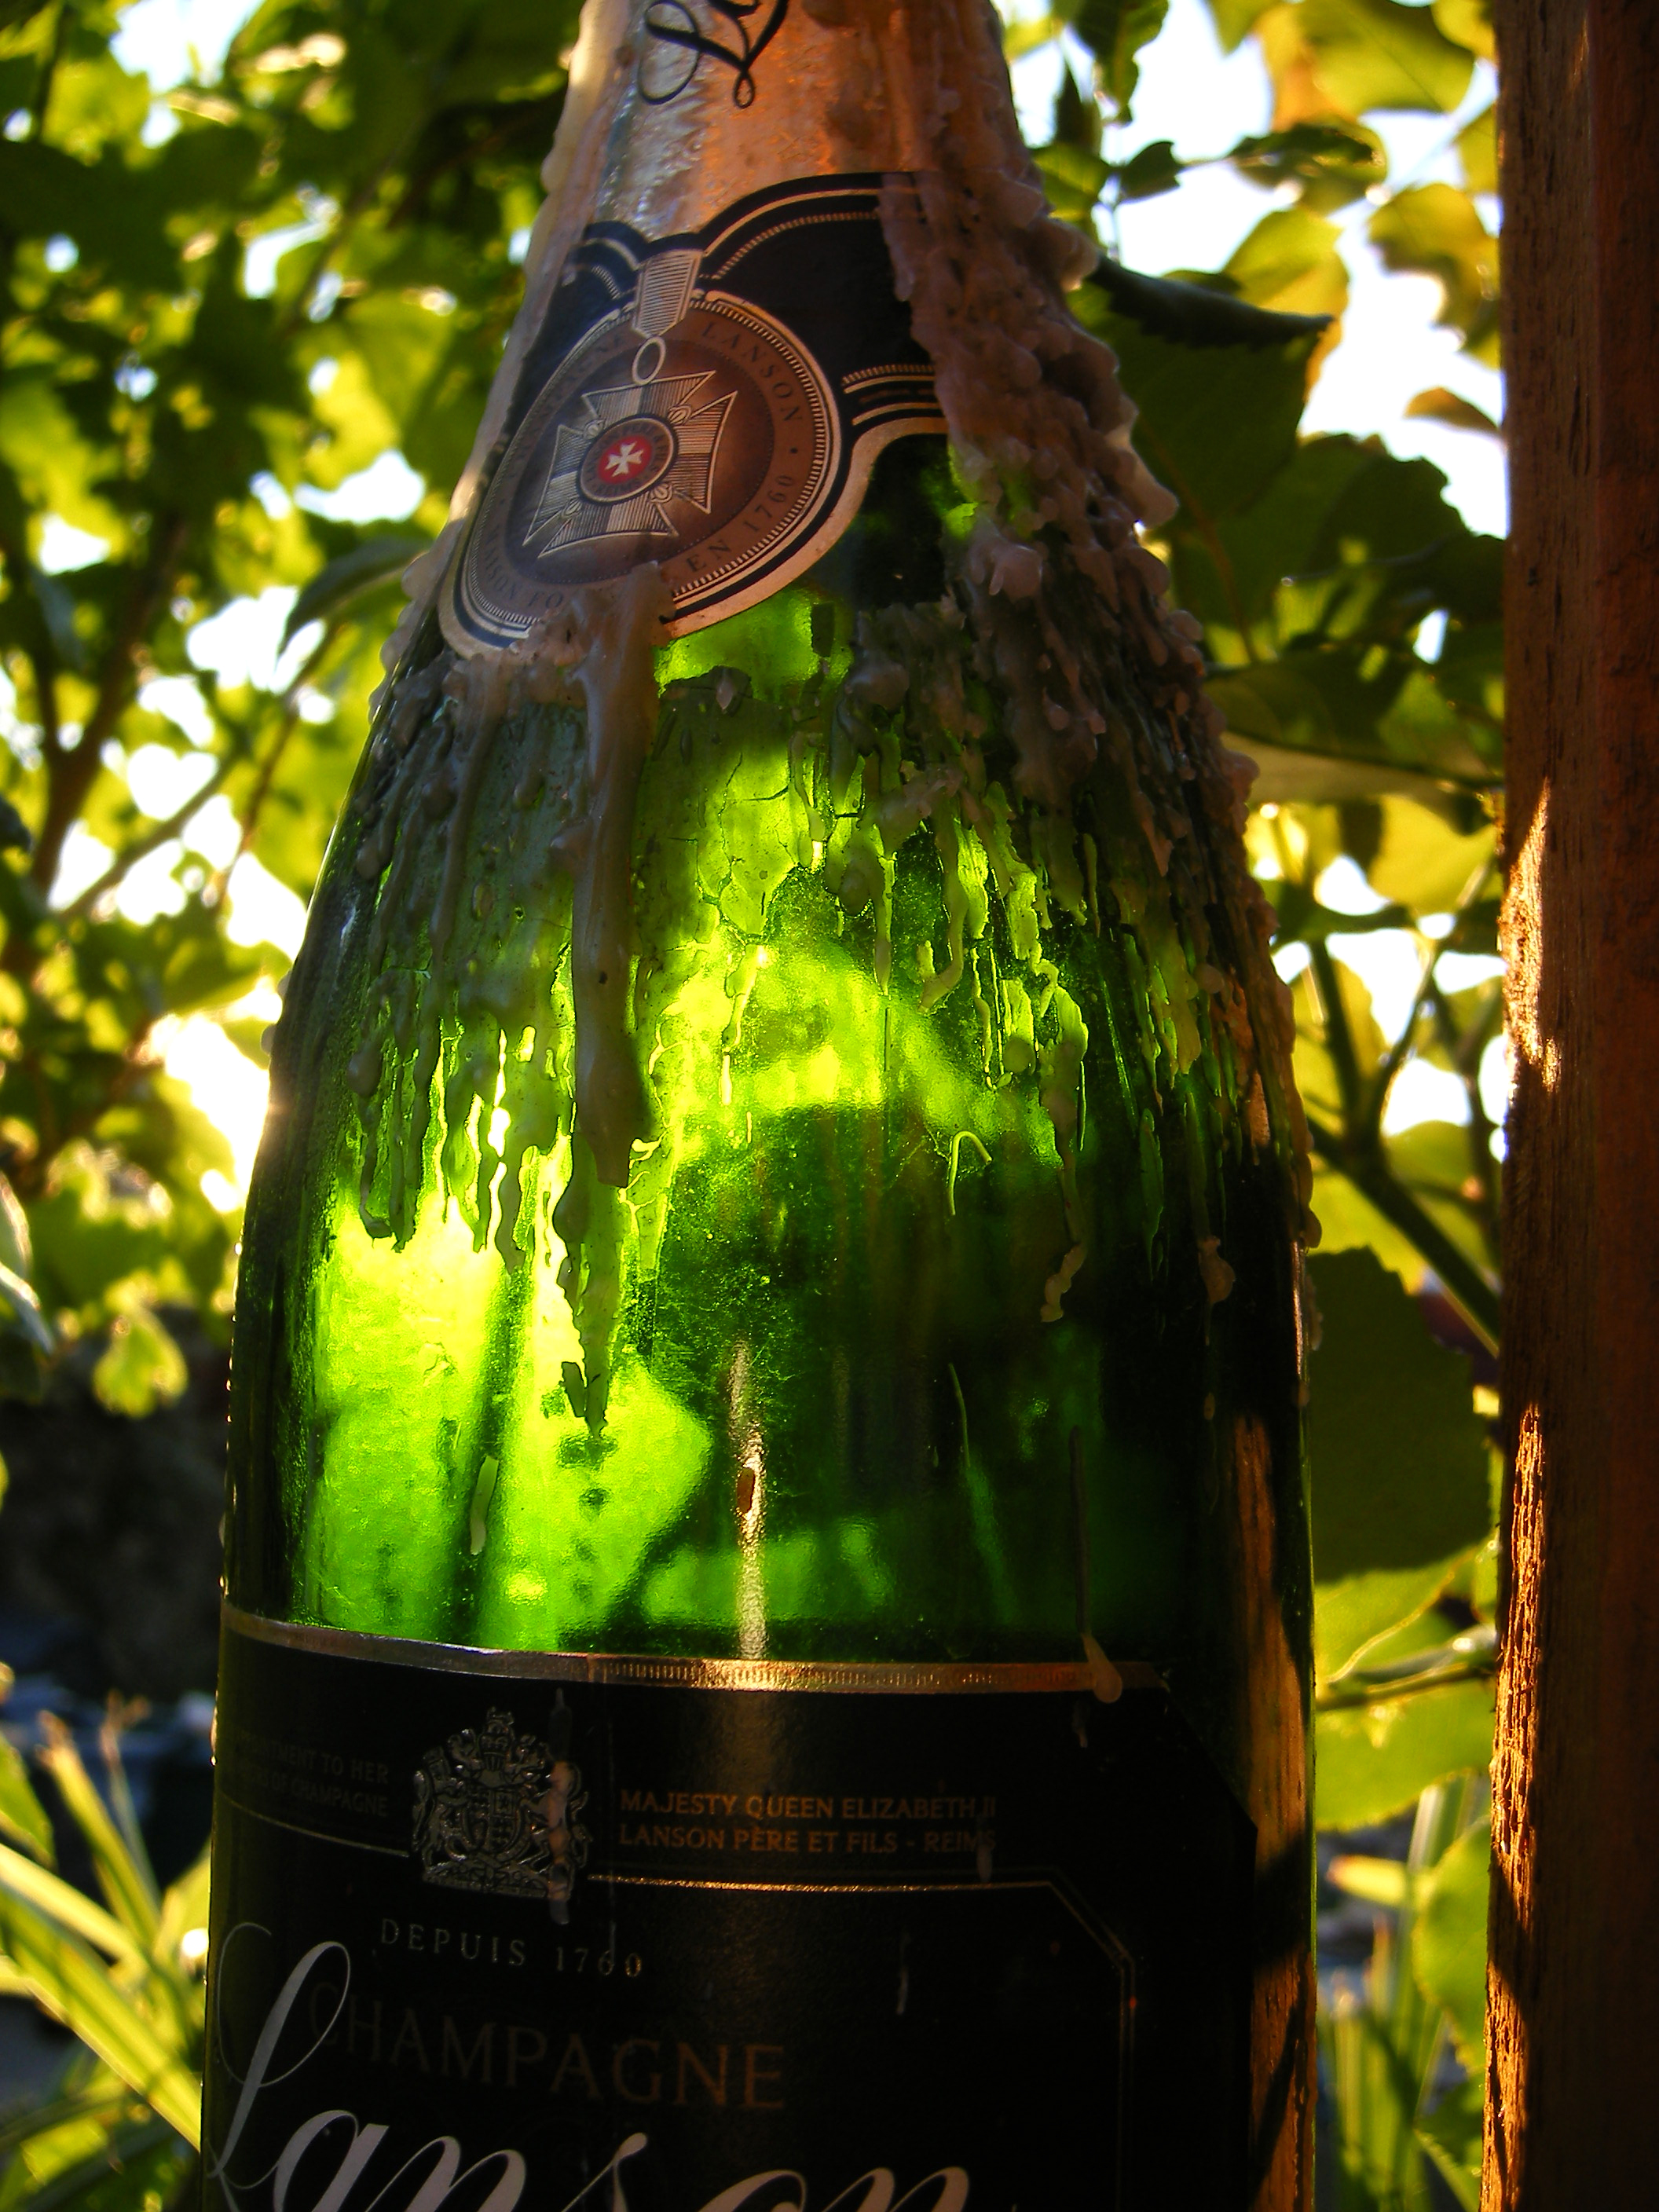 Champagne bottle photo